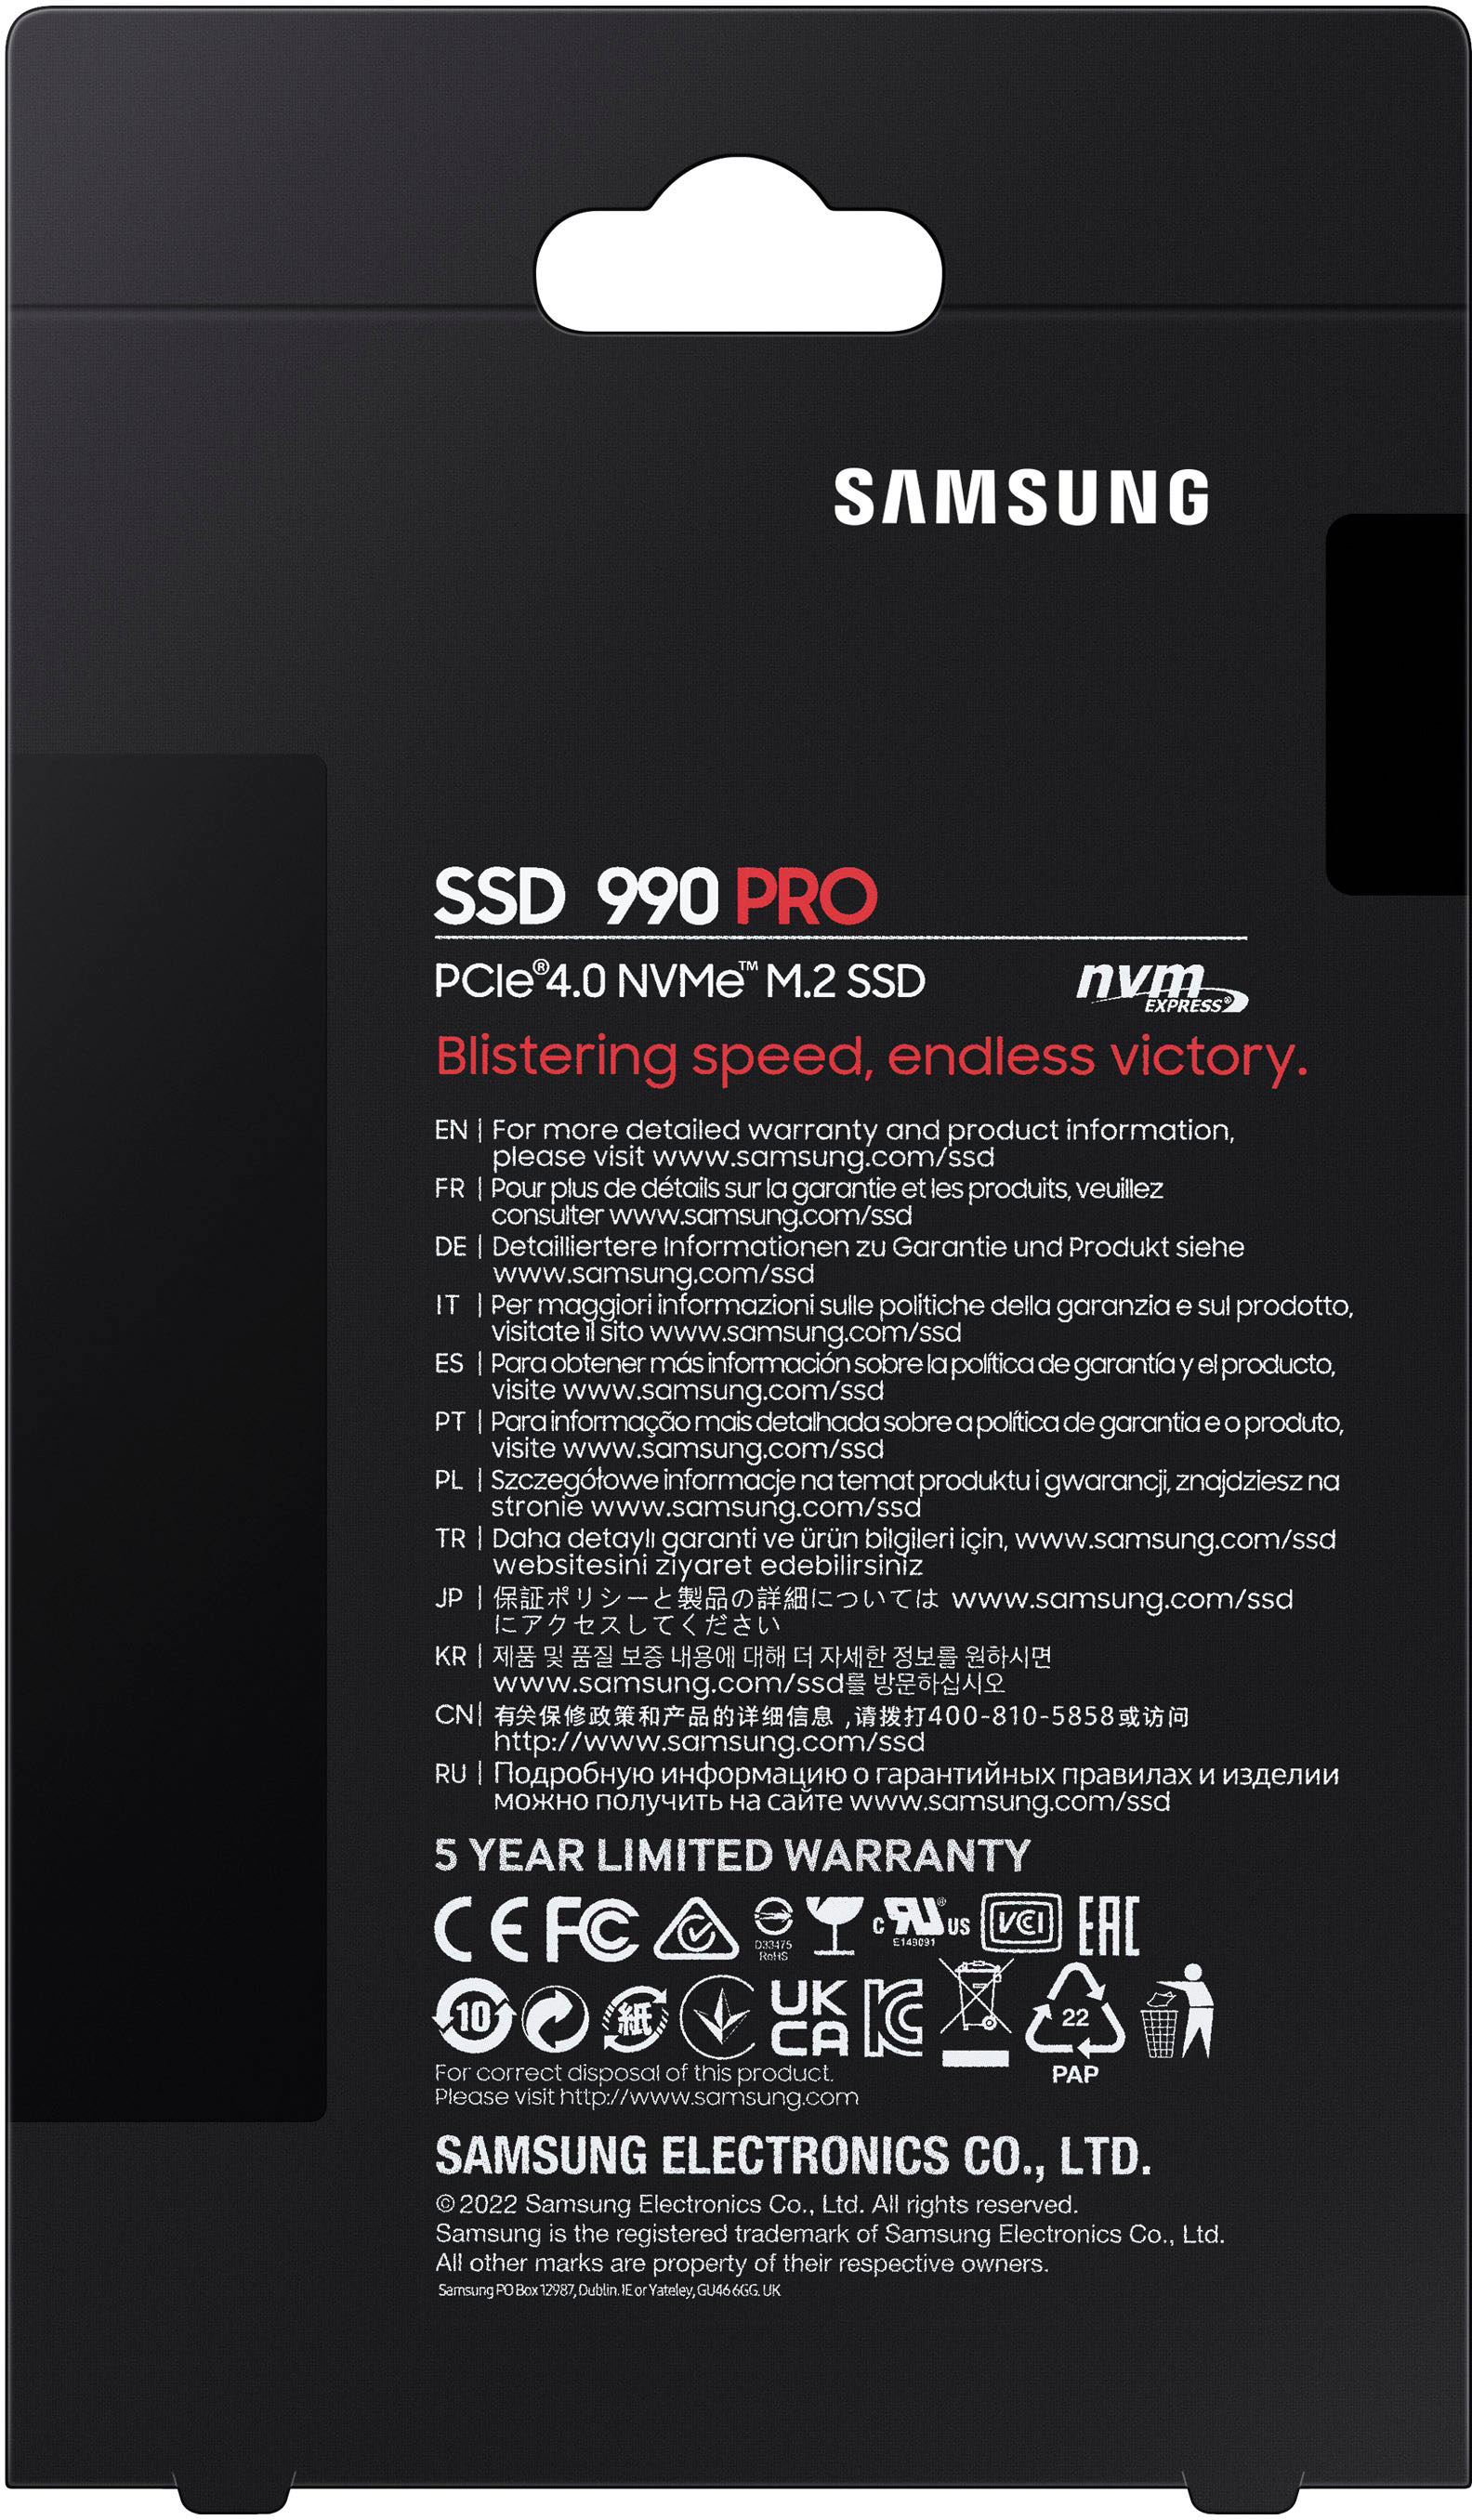 Samsung MZ-V9P4T0BW  Samsung 990 PRO M.2 4 To PCI Express 4.0 V-NAND MLC  NVMe